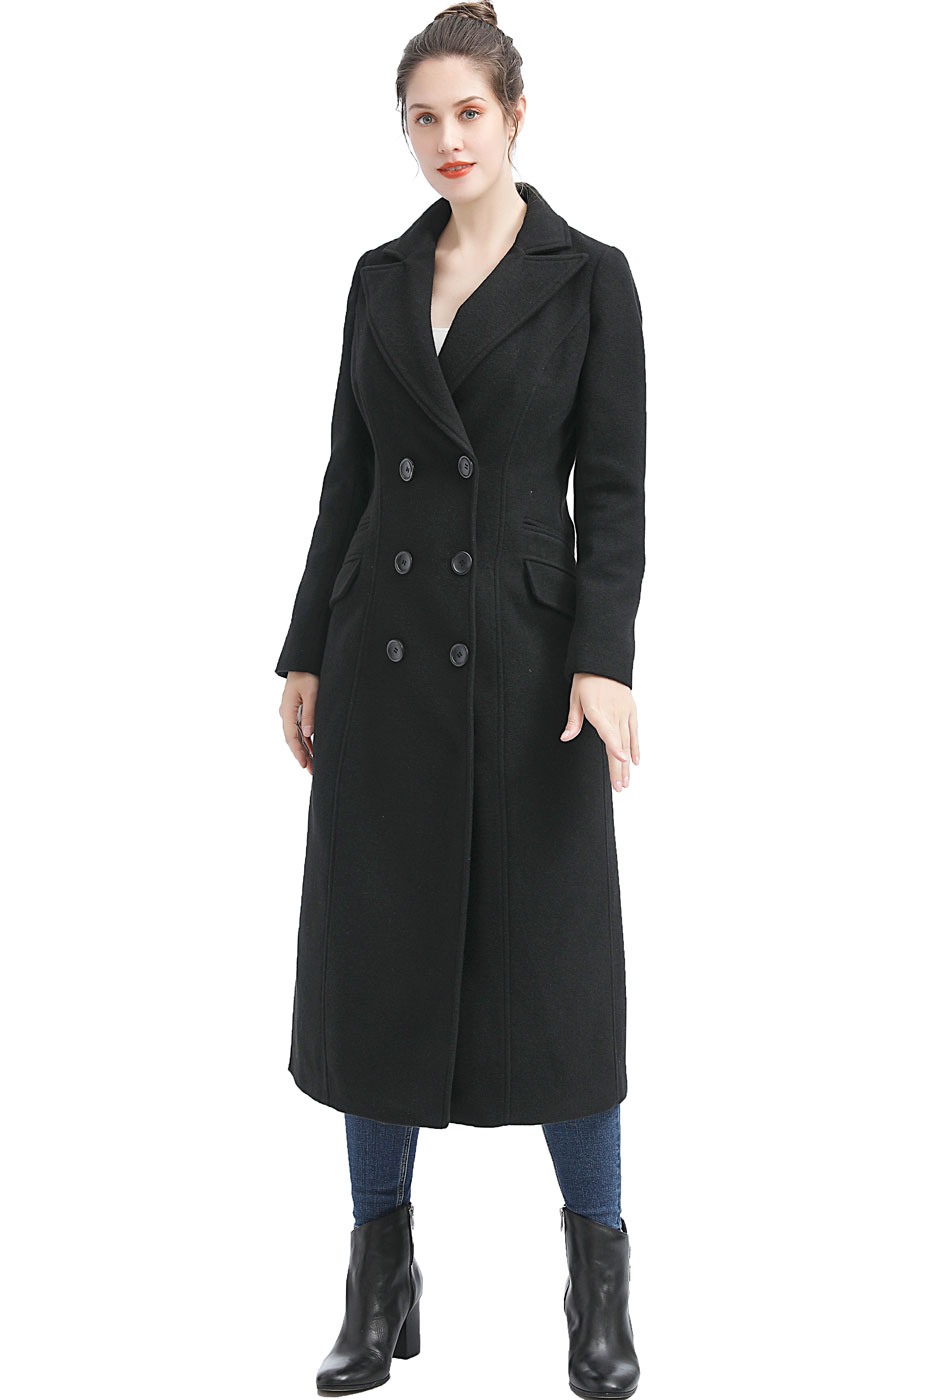 Women Fay Wool Walking Coat (Regular & Plus Size & Petite) - image 3 of 4